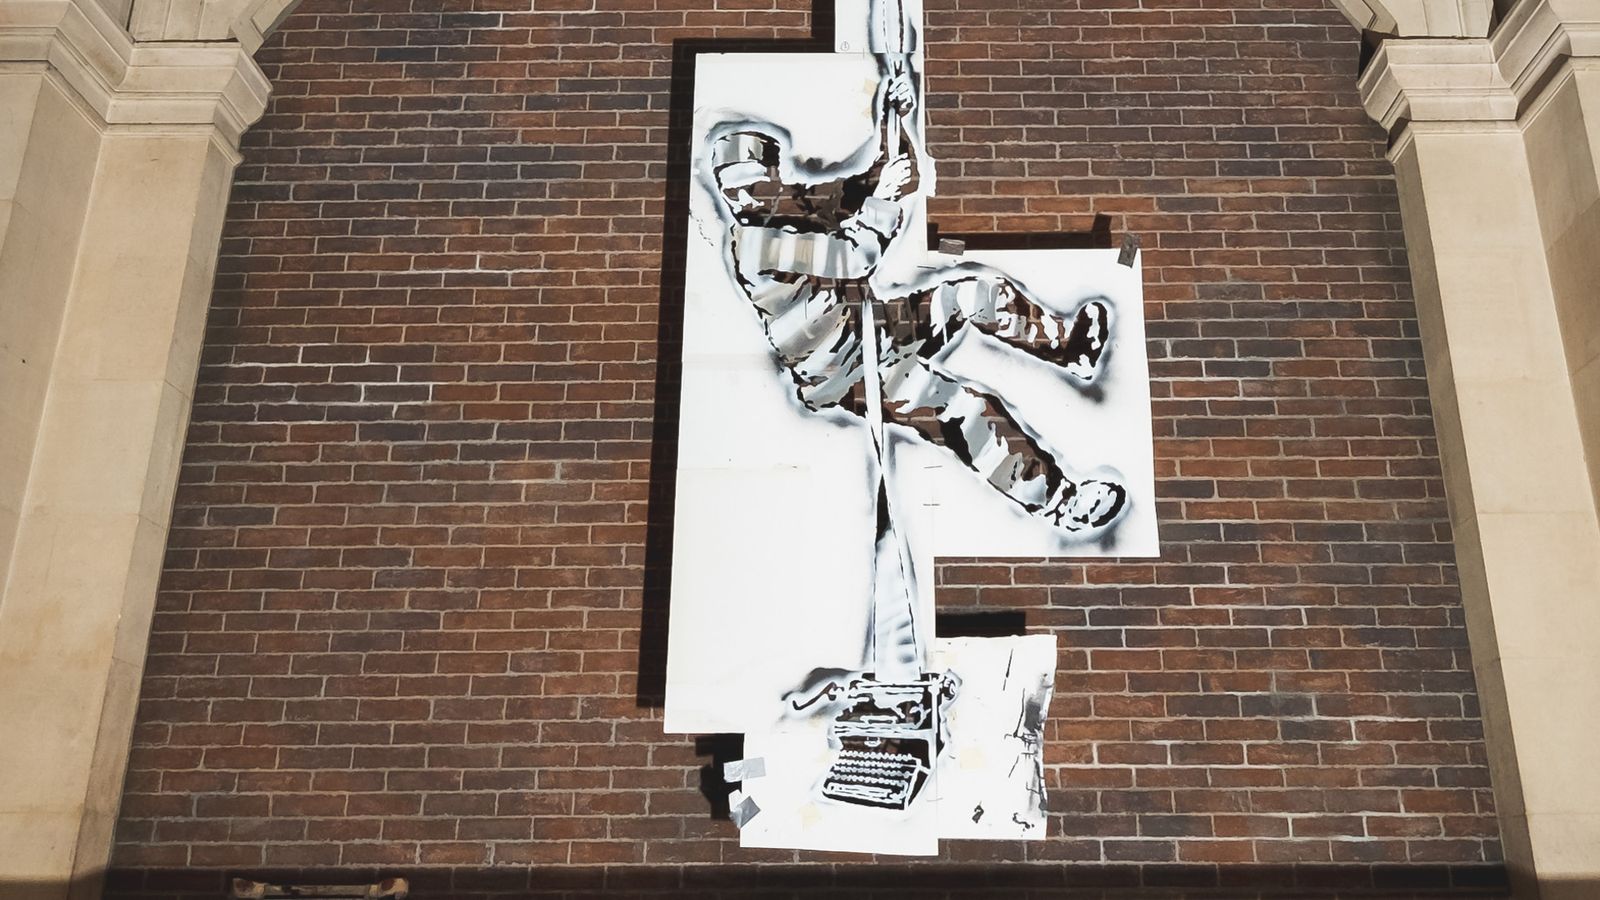 Janji Banksy senilai £10 juta untuk tawaran mengubah penjara menjadi ‘perlindungan seni’ |  Berita Ent & Seni